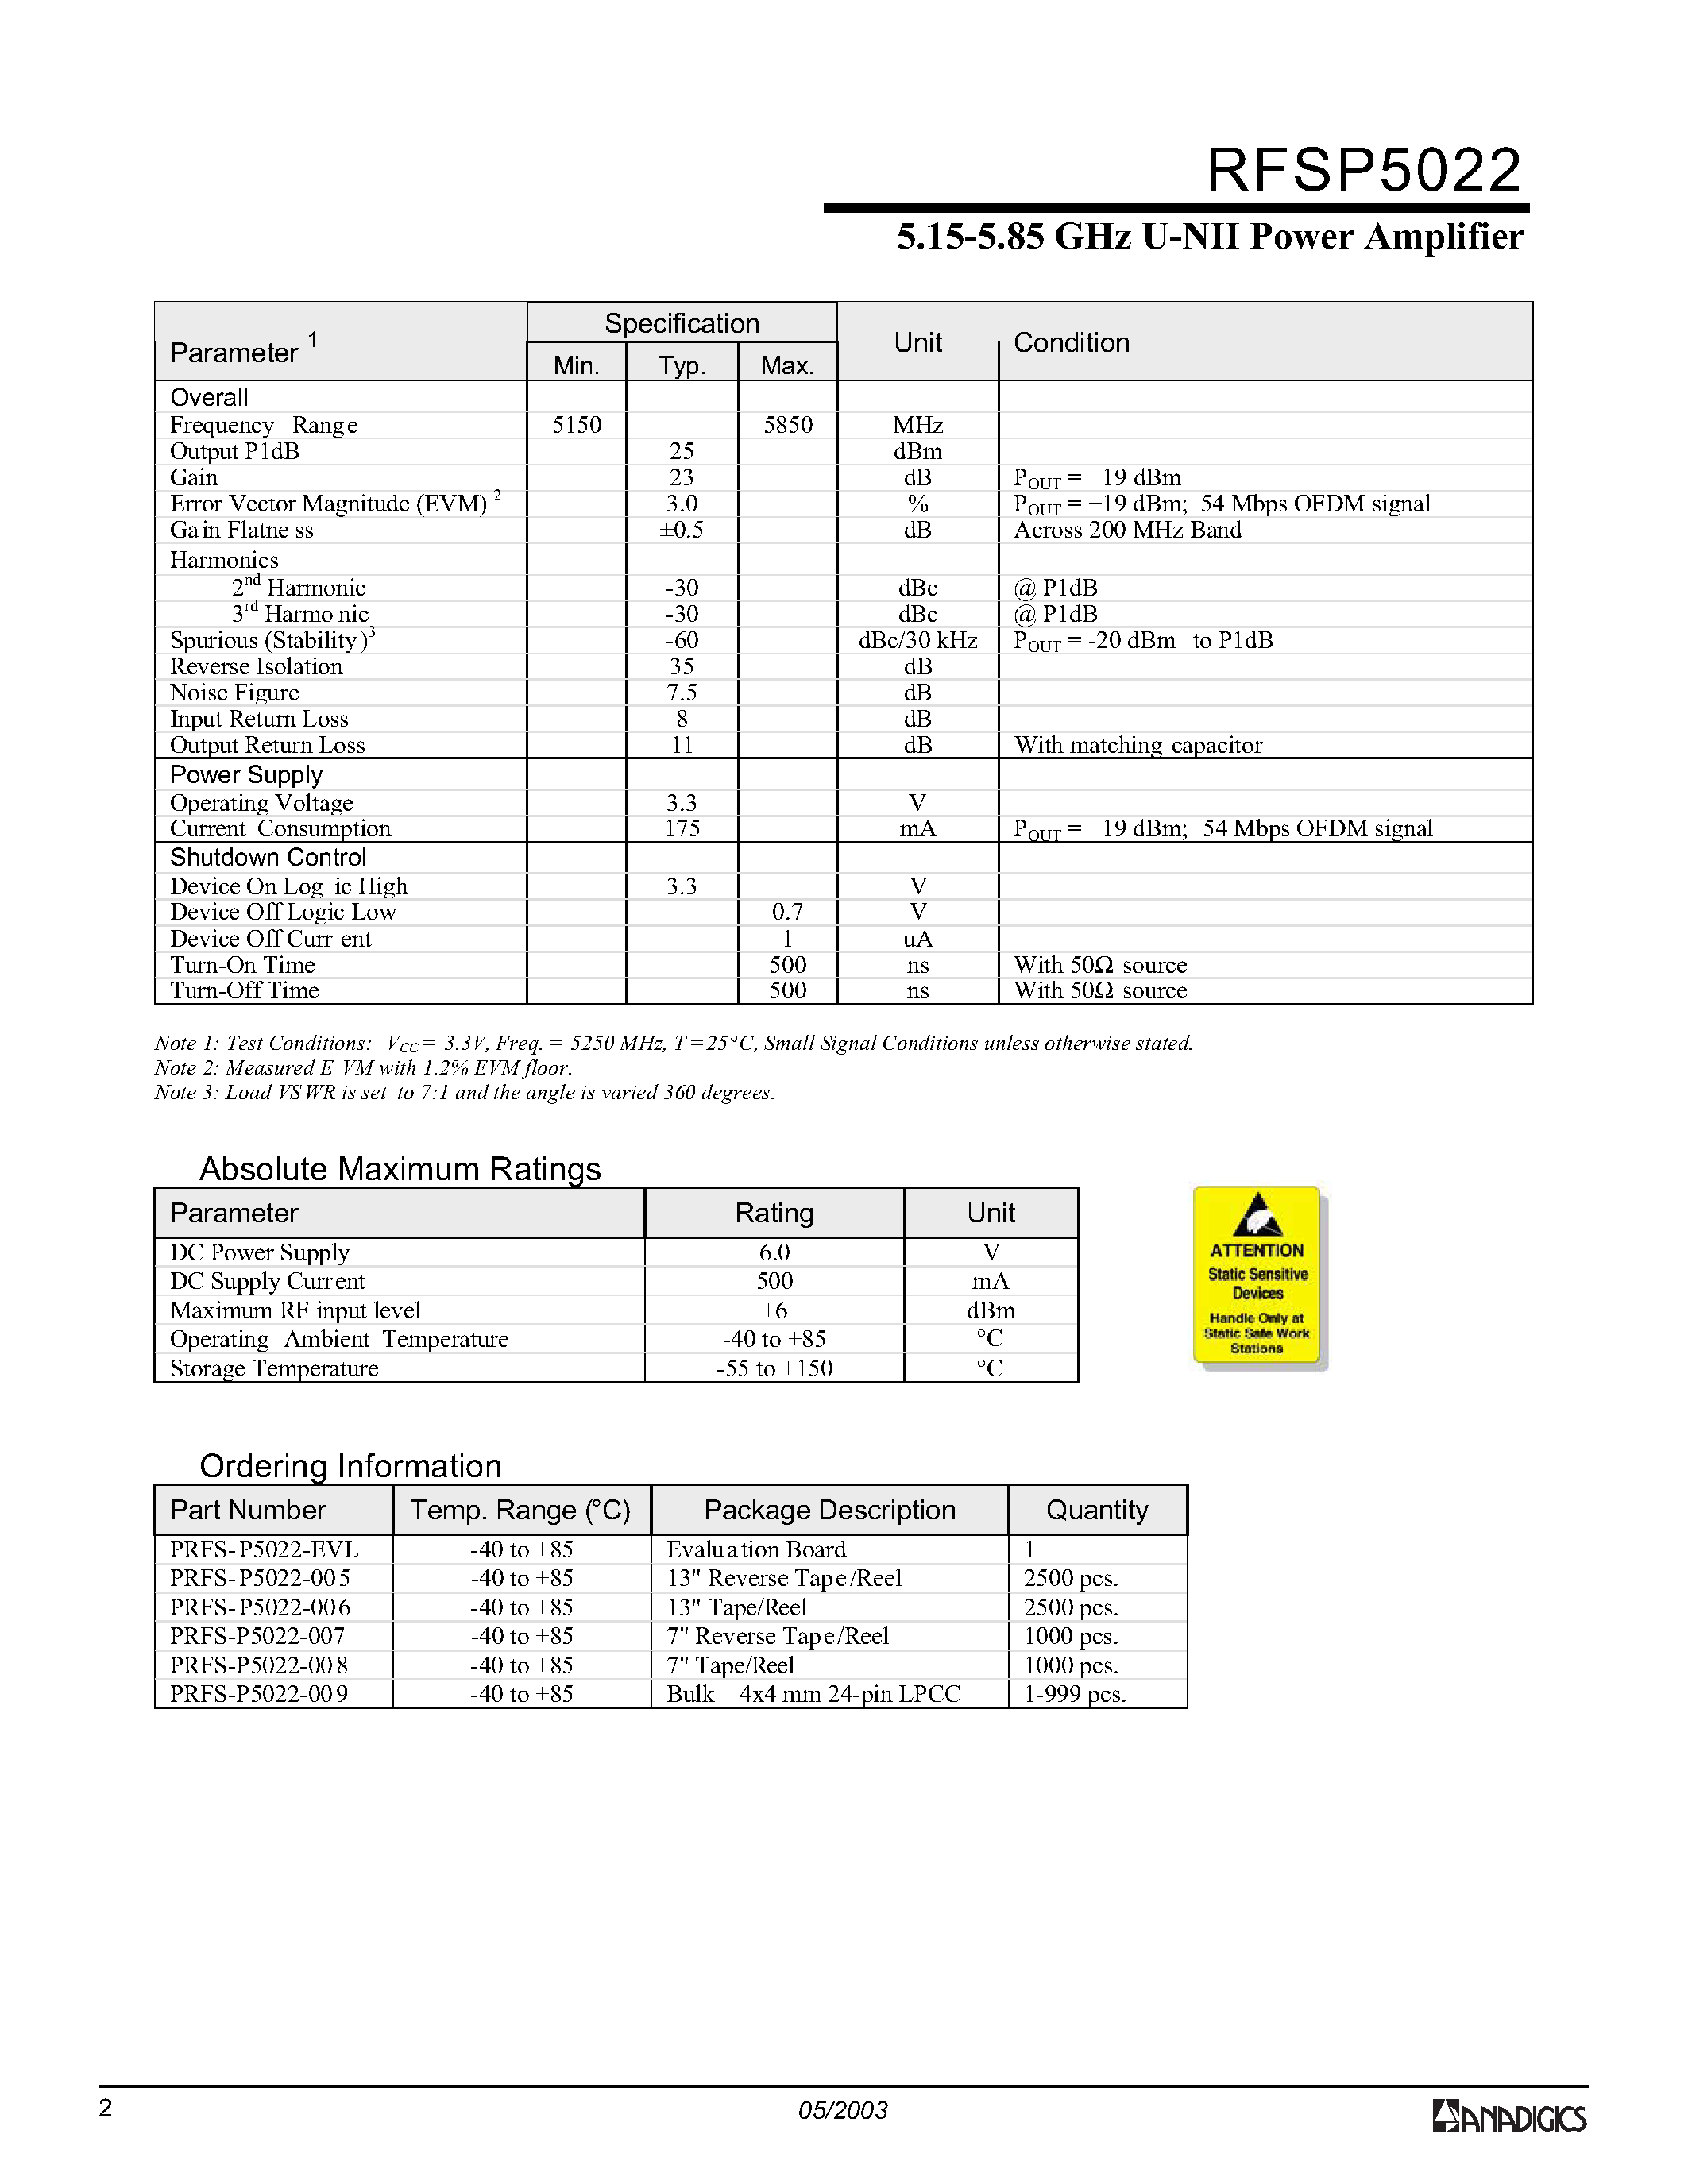 Datasheet PRFS-P5022-009 - 5.15-5.85 GHz U-NII Power Amplifier page 2